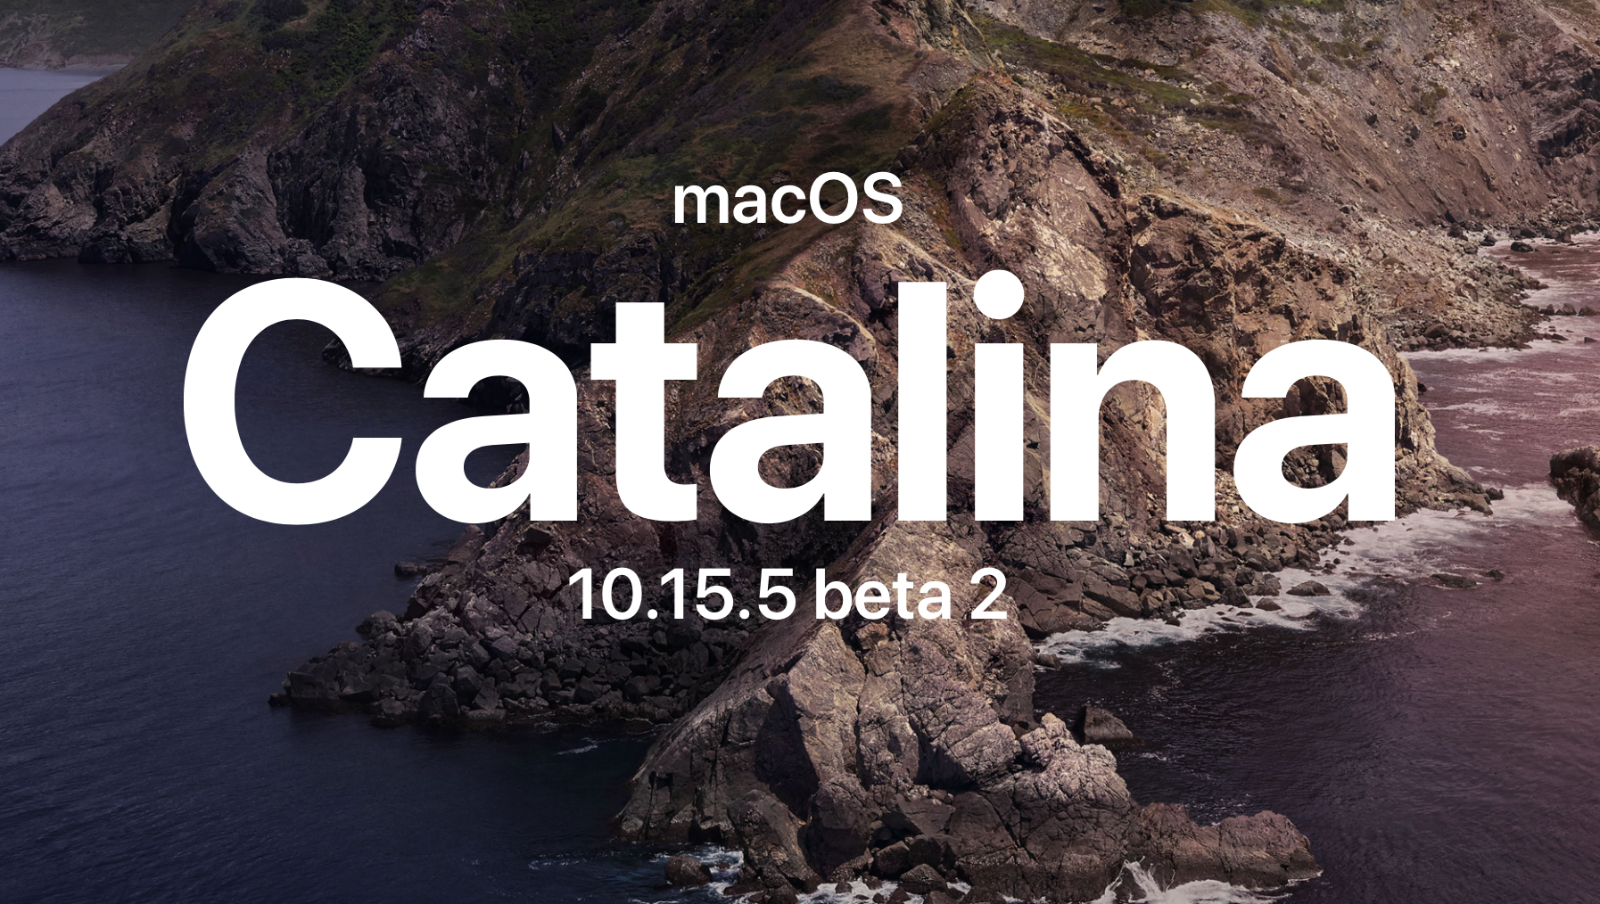 macOS Catalina 10.15.5 beta 2